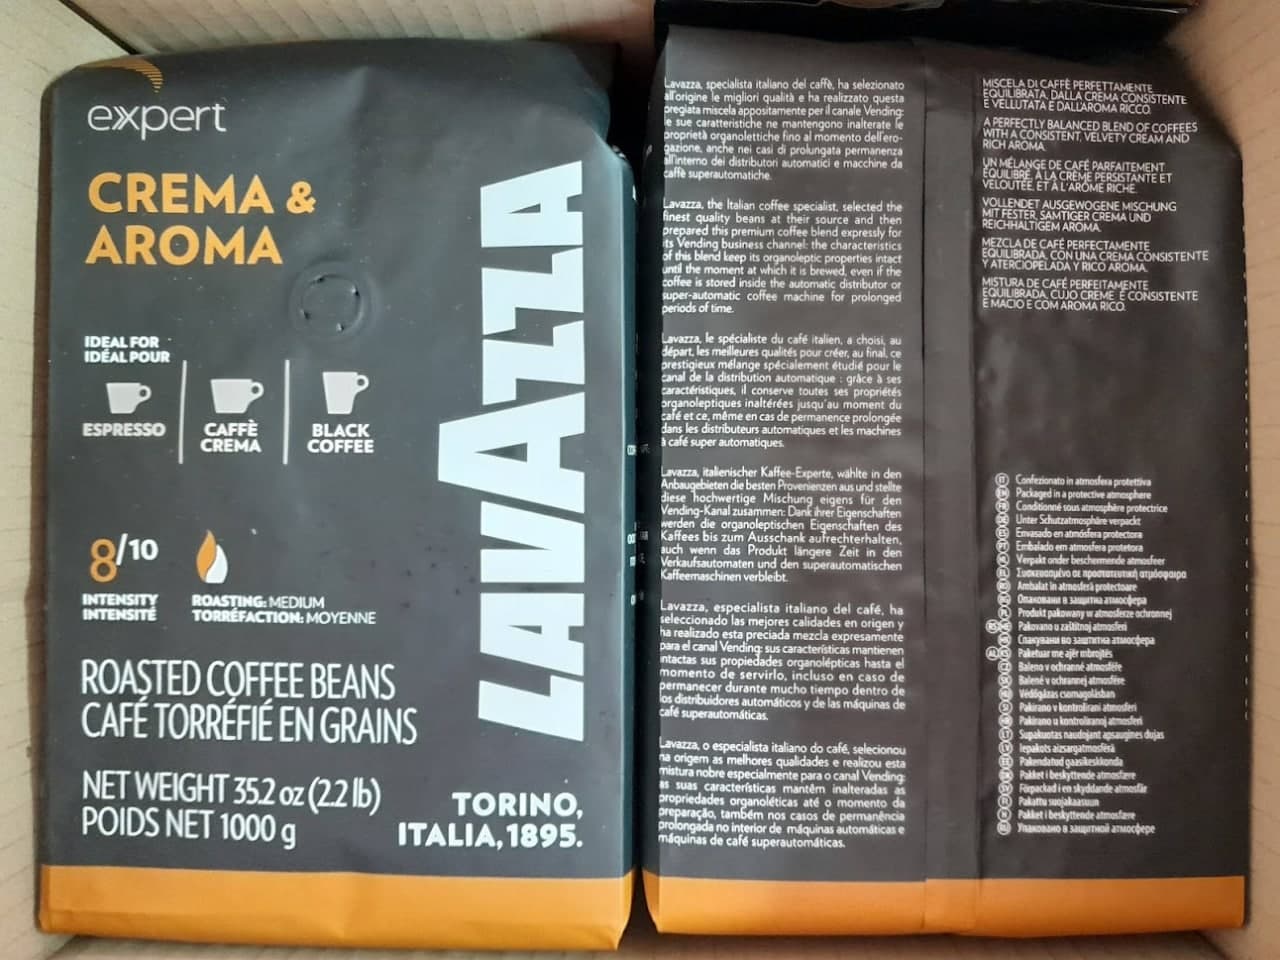 Kohvioad "LAVAZZA" Expert Crema e Aroma